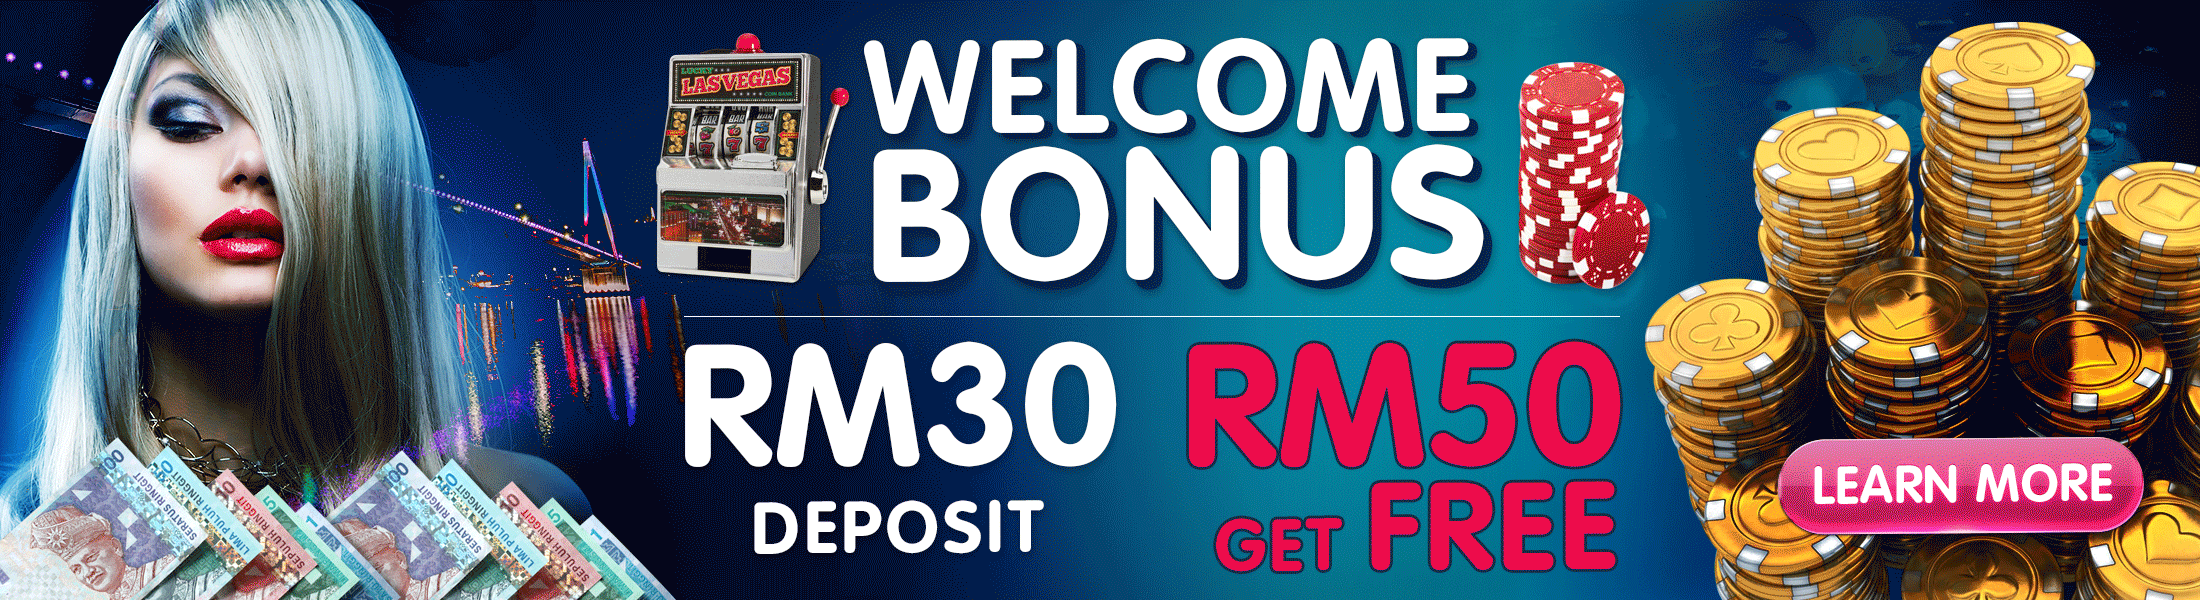 Deposit 30 Free 50 Promotion SKY3888 Top Up Bonus!